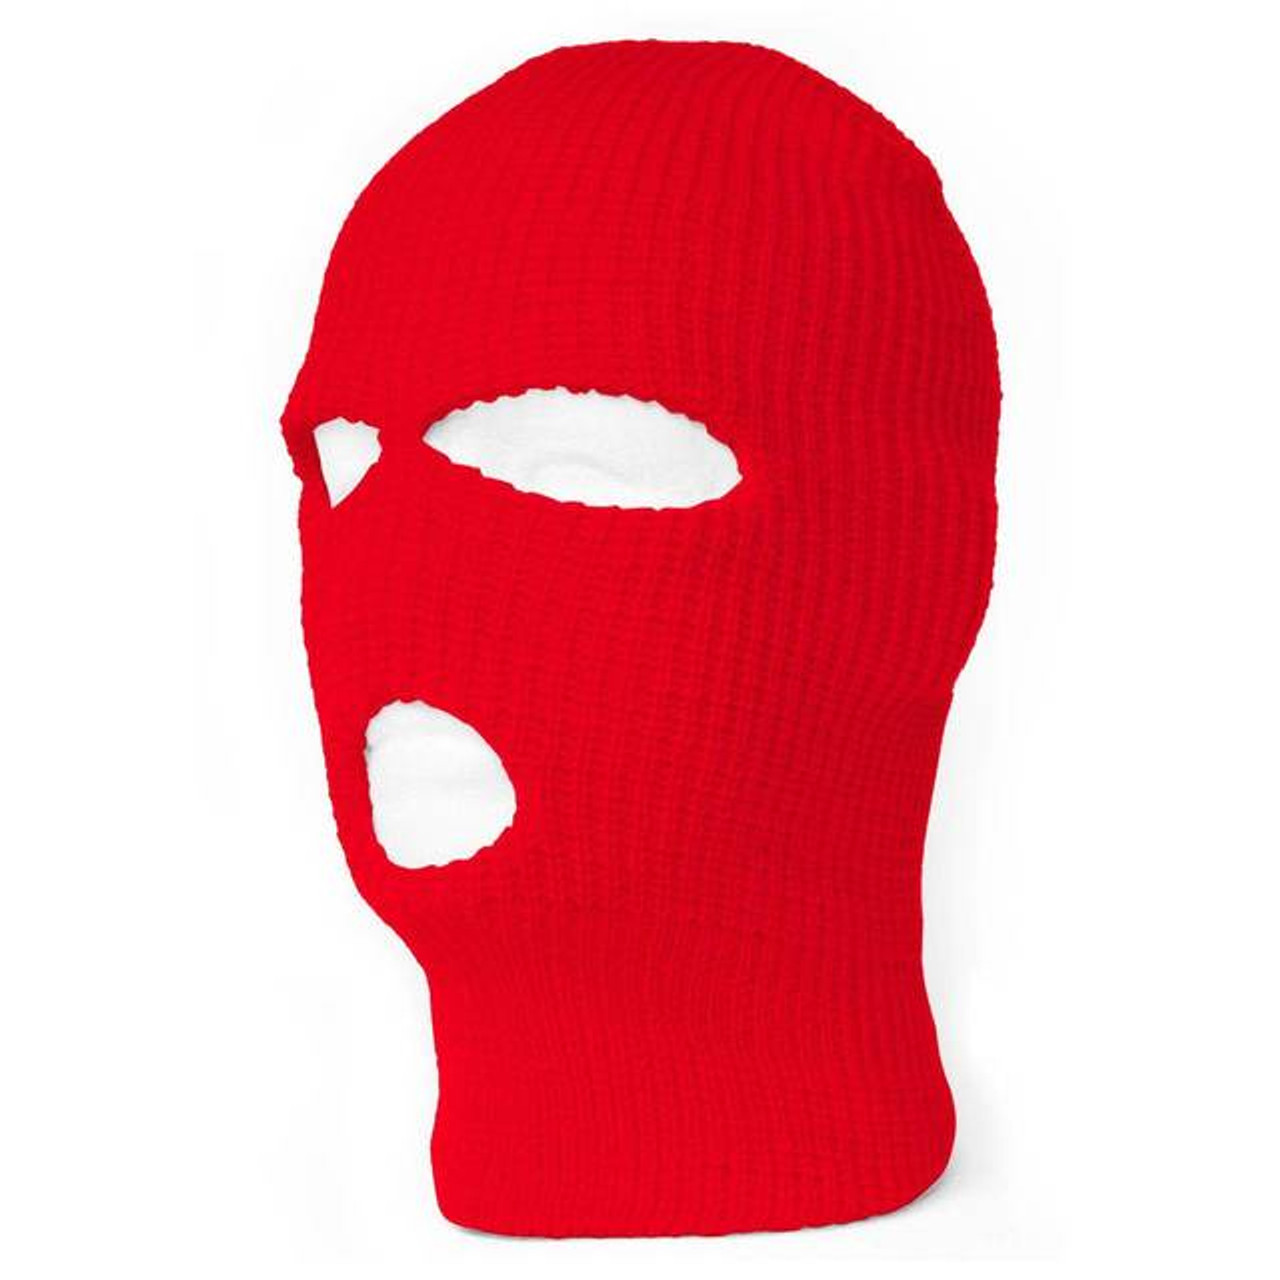 Men's Black/ Red Supreme Beanie / Ski Mask for Sale in Columbia